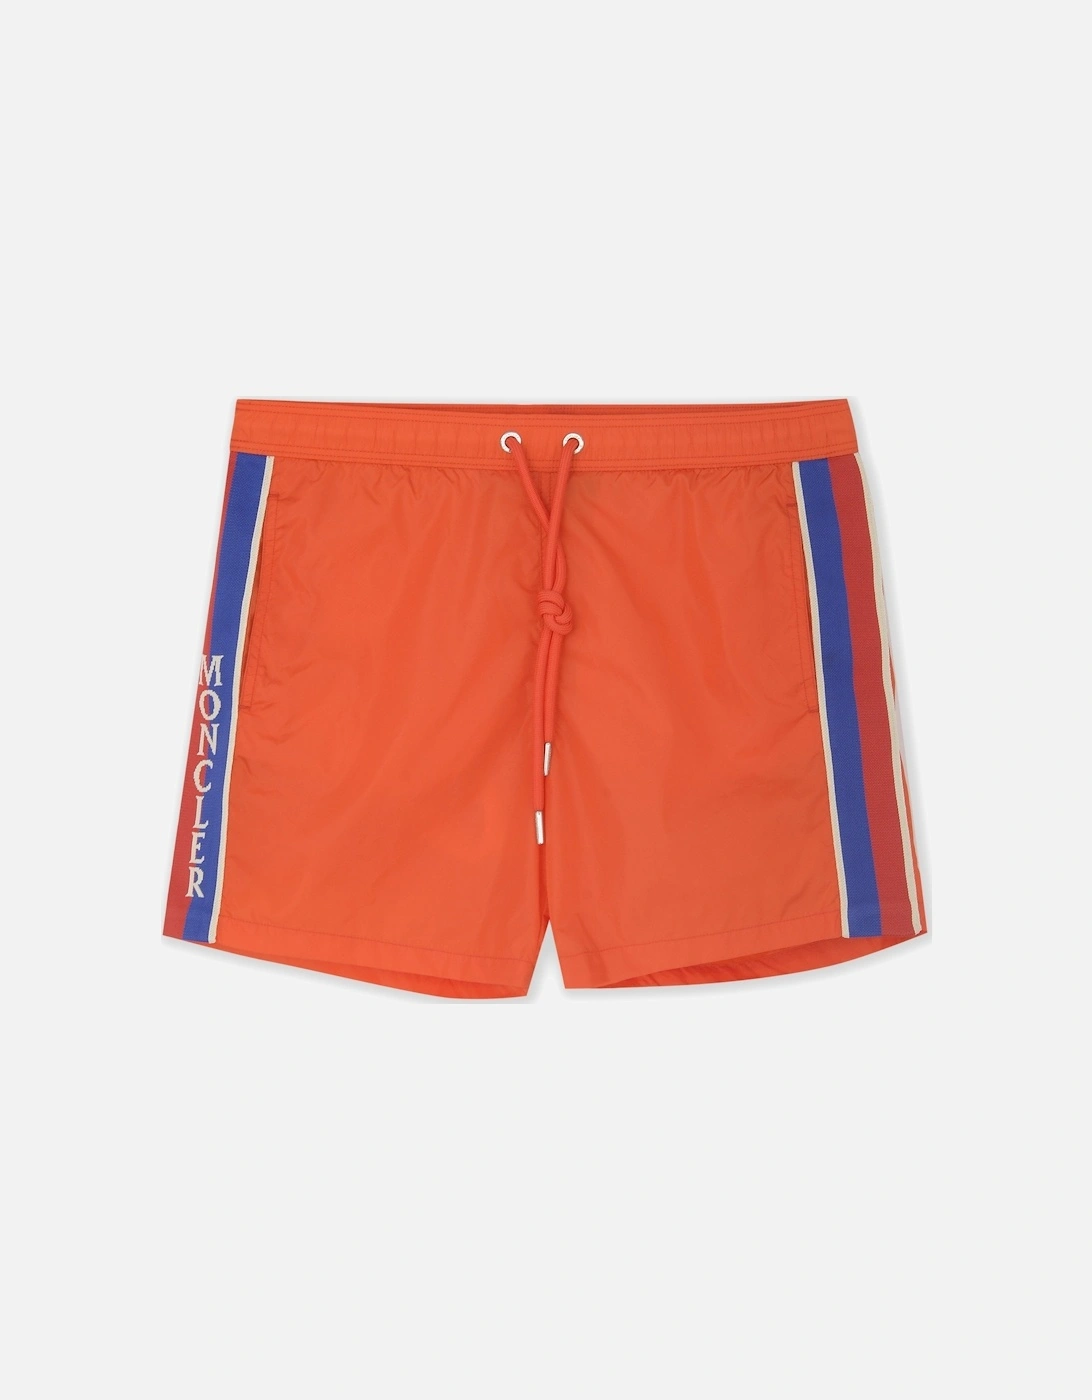 Classic Branded Swimshorts Orange, 7 of 6